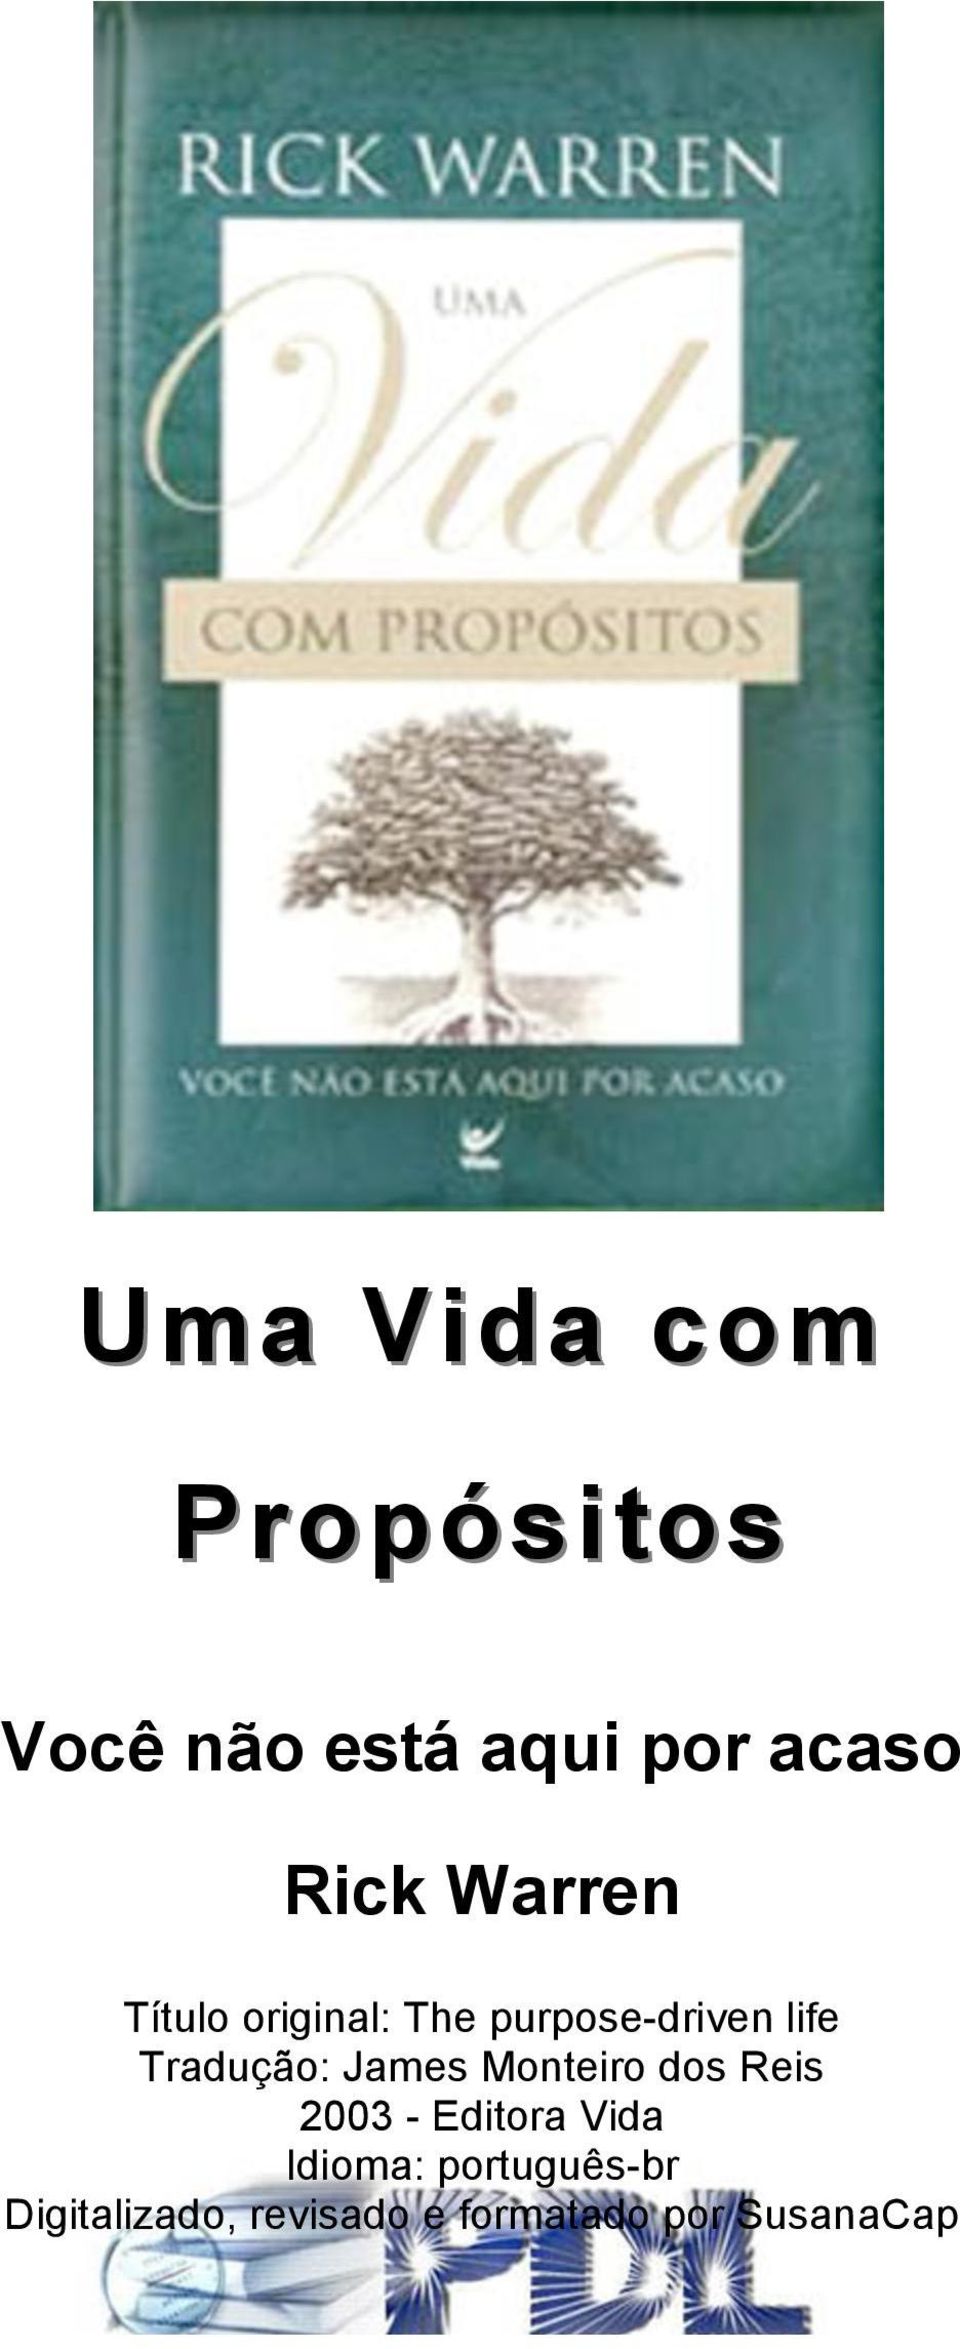 James Monteiro dos Reis 2003 - Editora Vida Idioma: